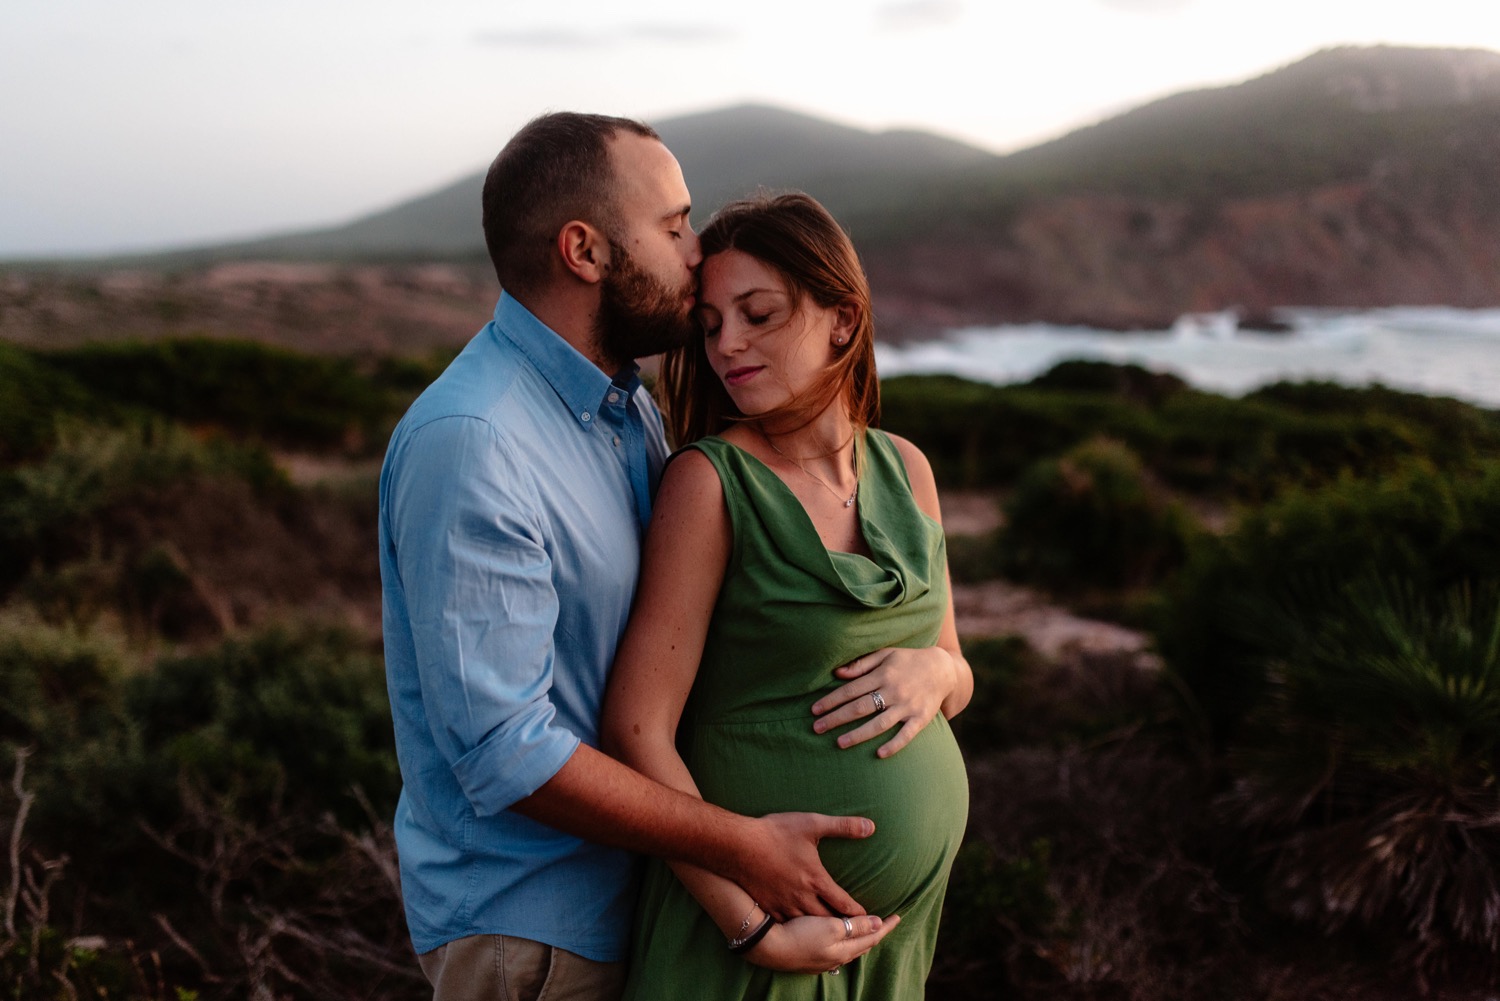 Pregnancy photography, Alghero Sardinia. In autumn 2